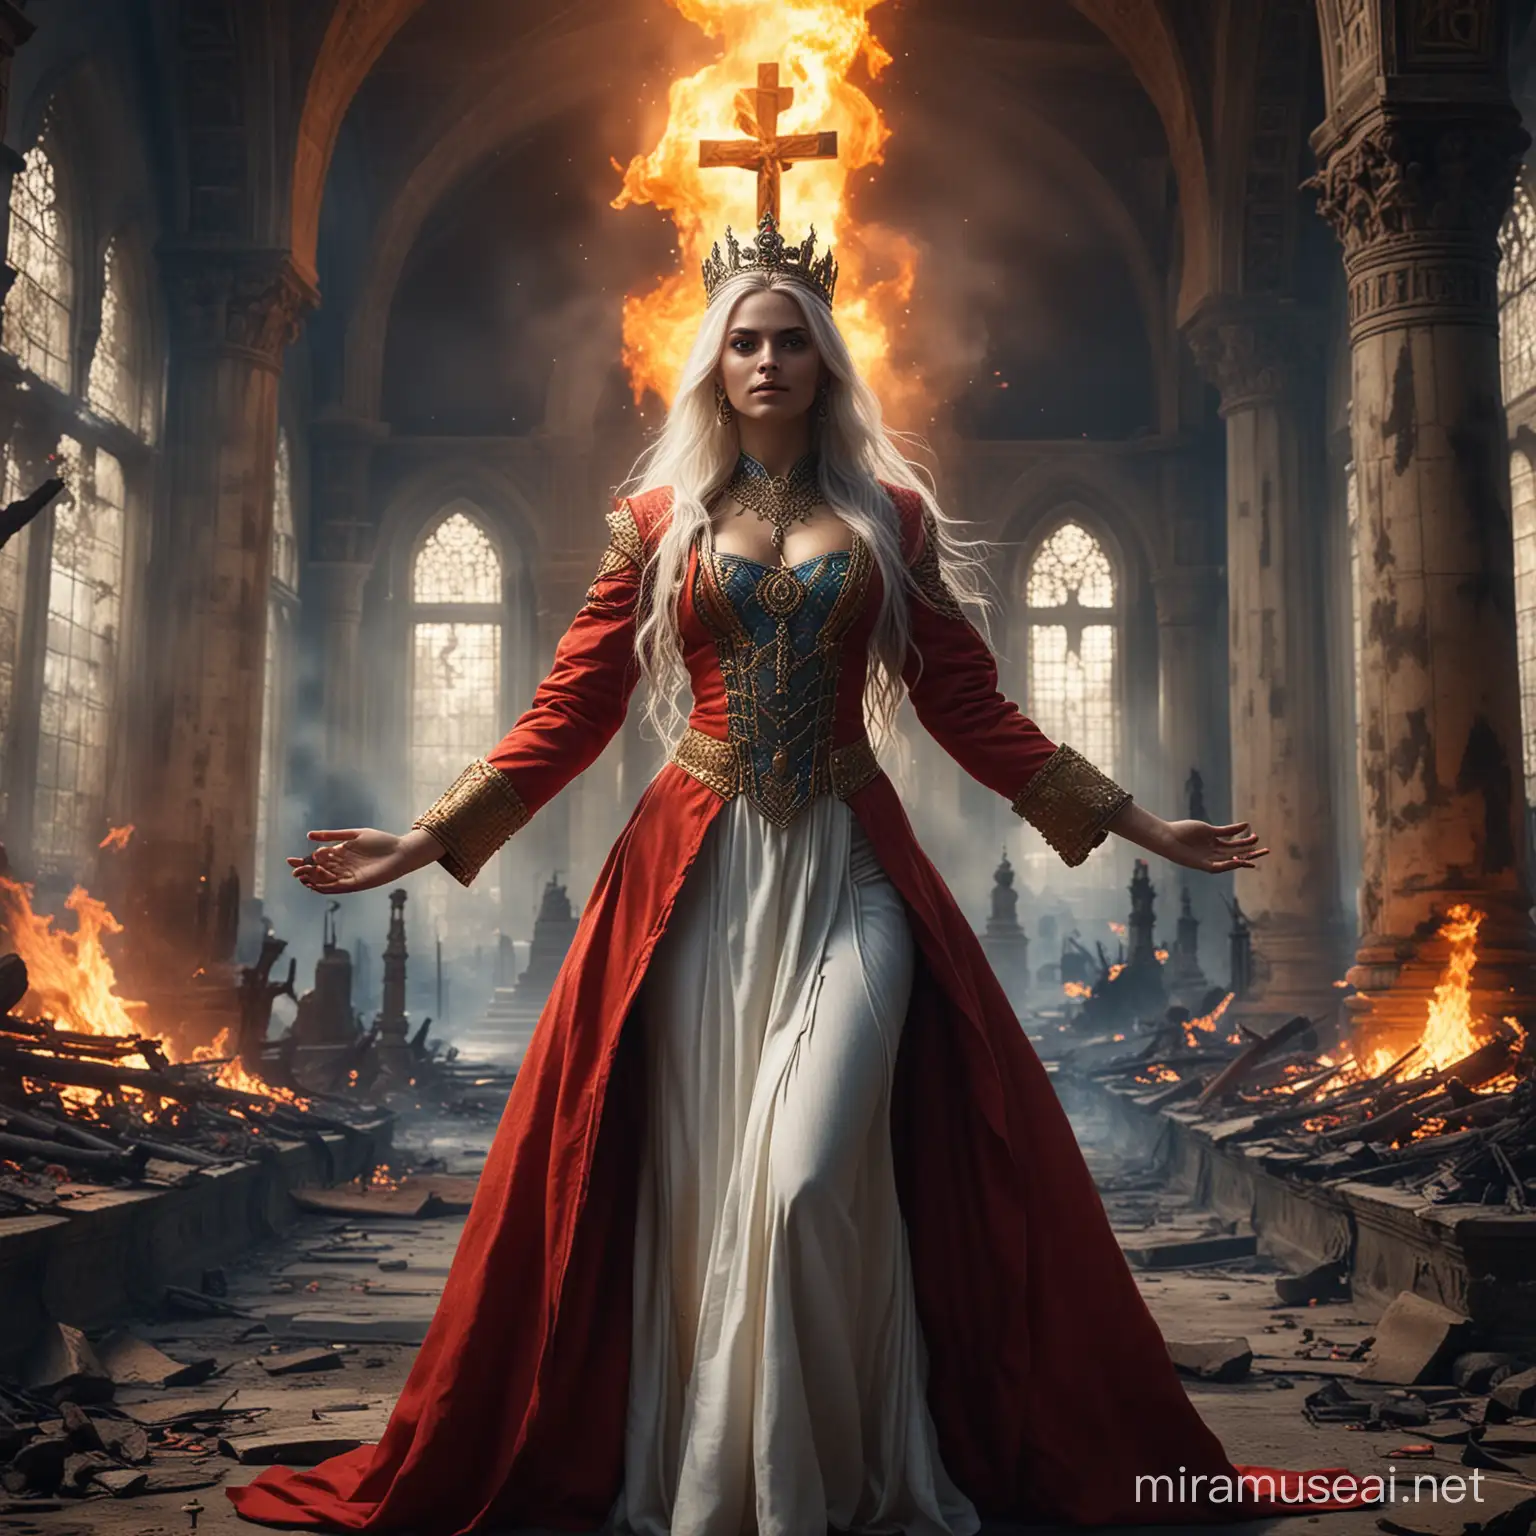 Divine Empress Kayashiel Reigns Amidst Inferno in Ancient Temple